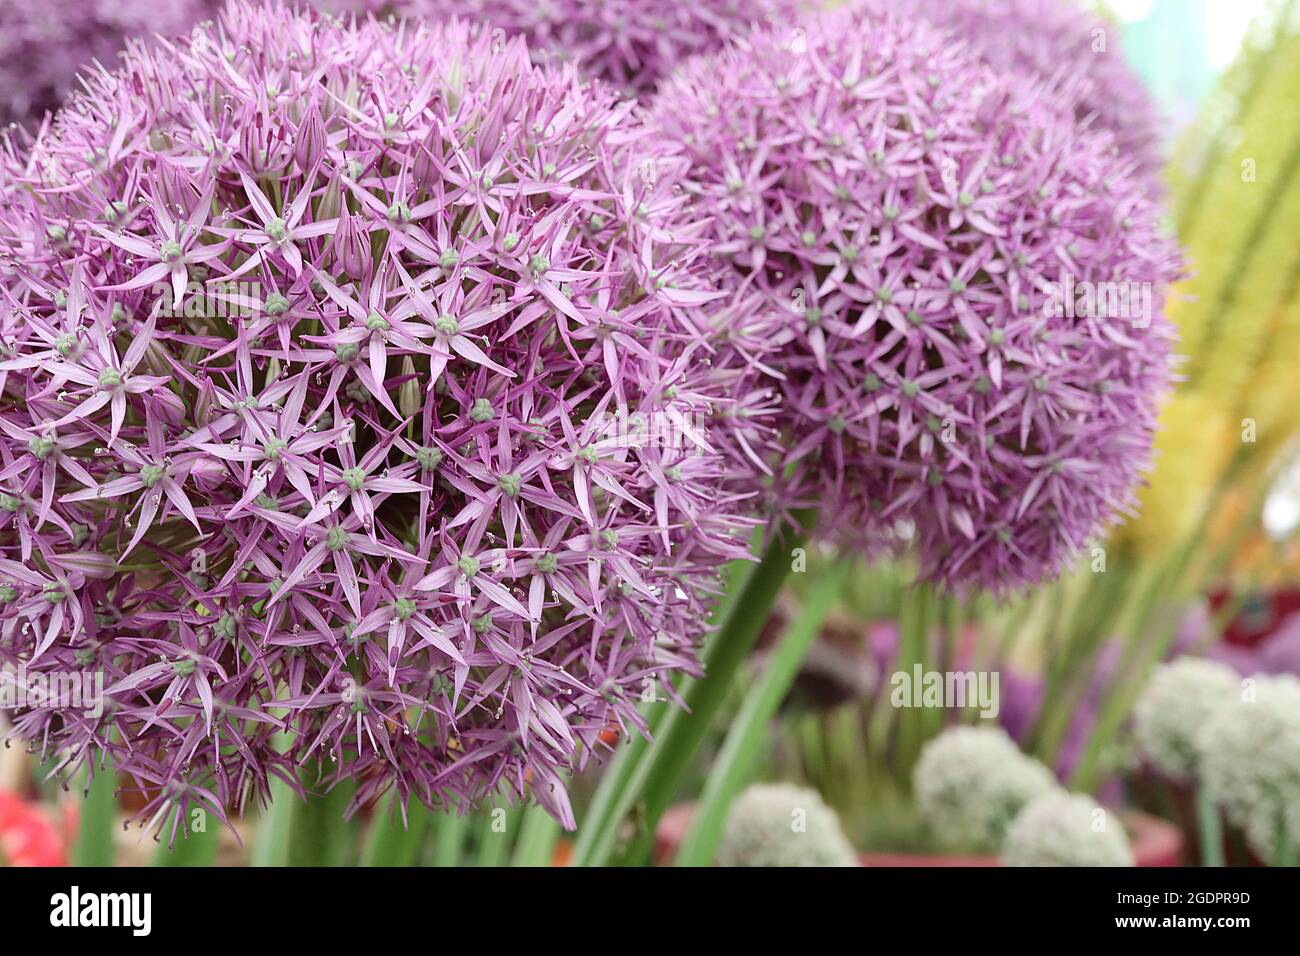 Allium ‘Pinball Wizard’ dense spherical umbels of star-shaped violet flowers on medium stems,  July, England, UK Stock Photo